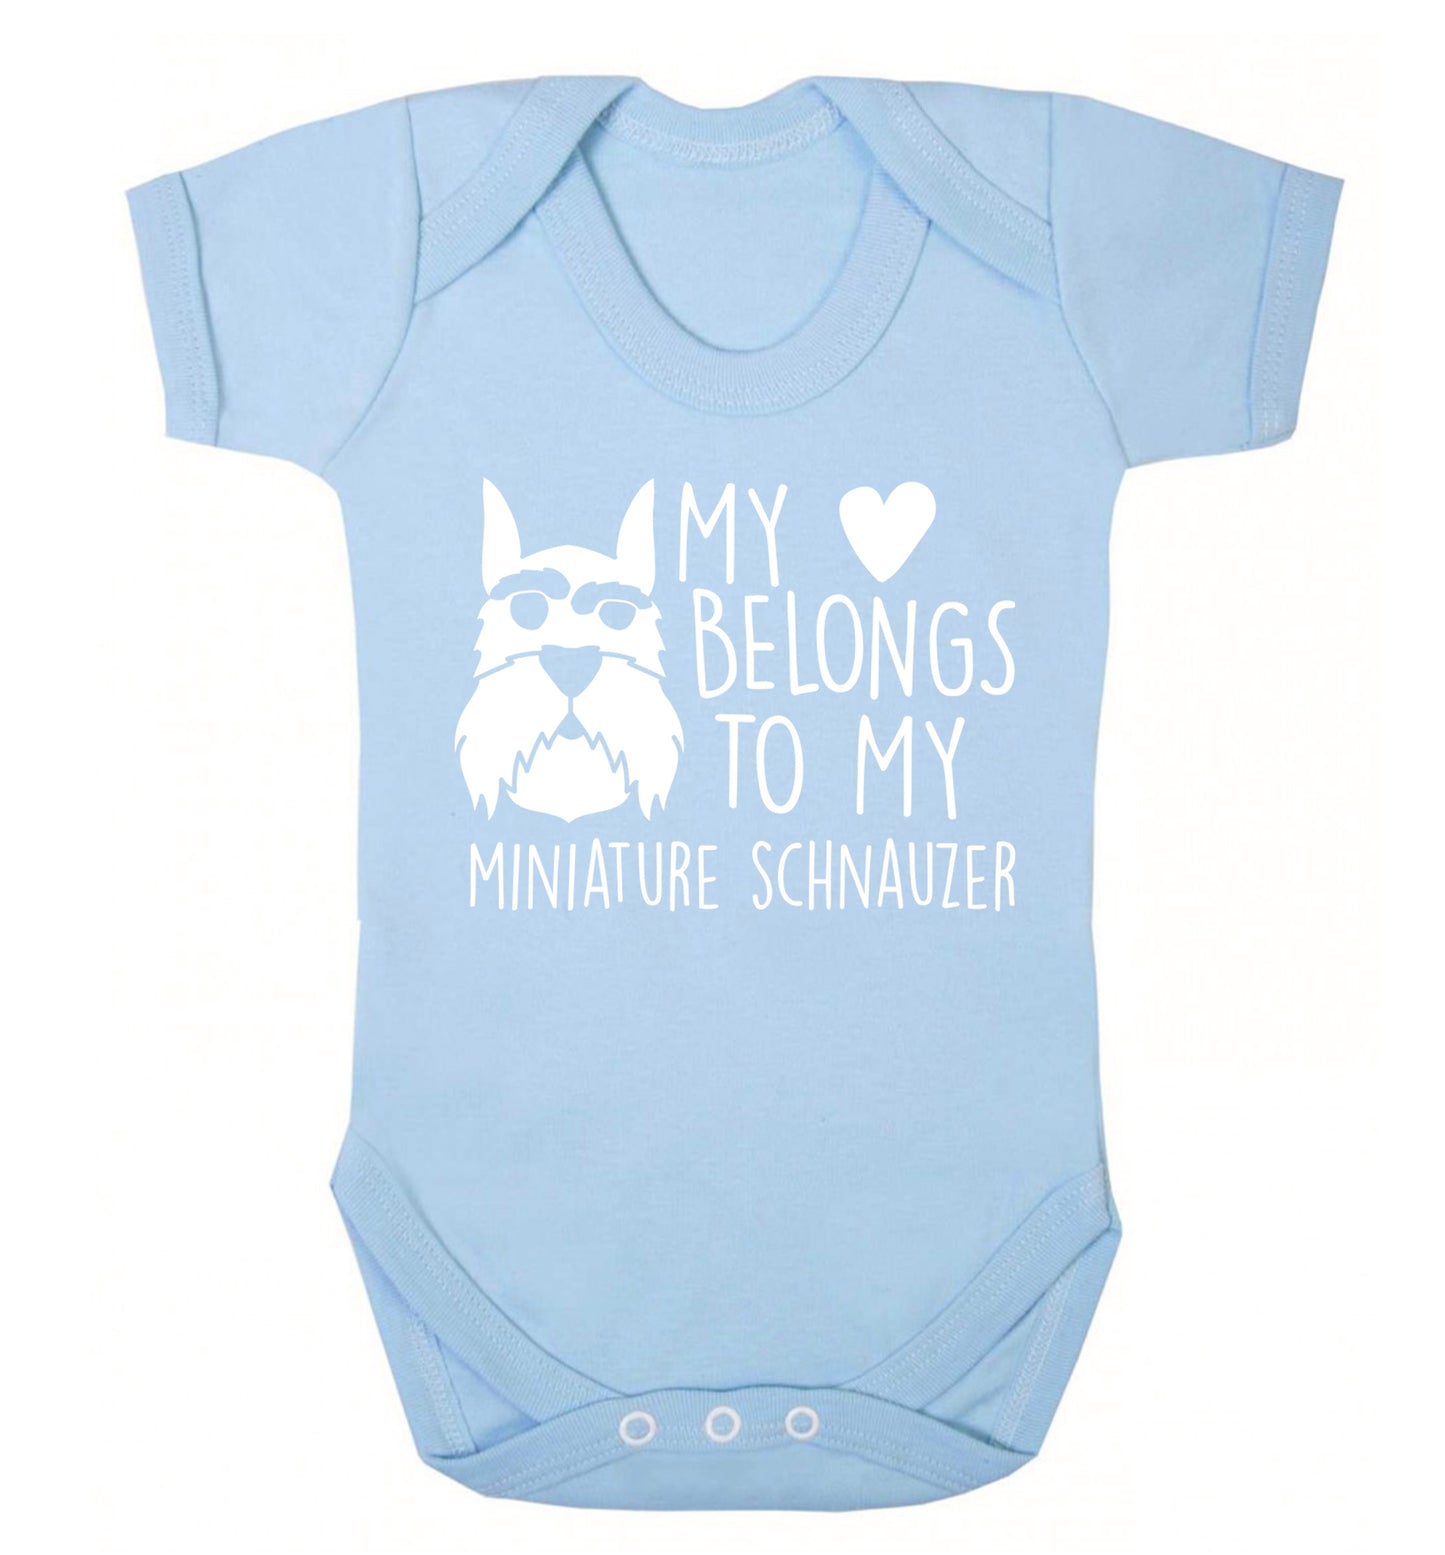 My heart belongs to my miniature schnauzer Baby Vest pale blue 18-24 months